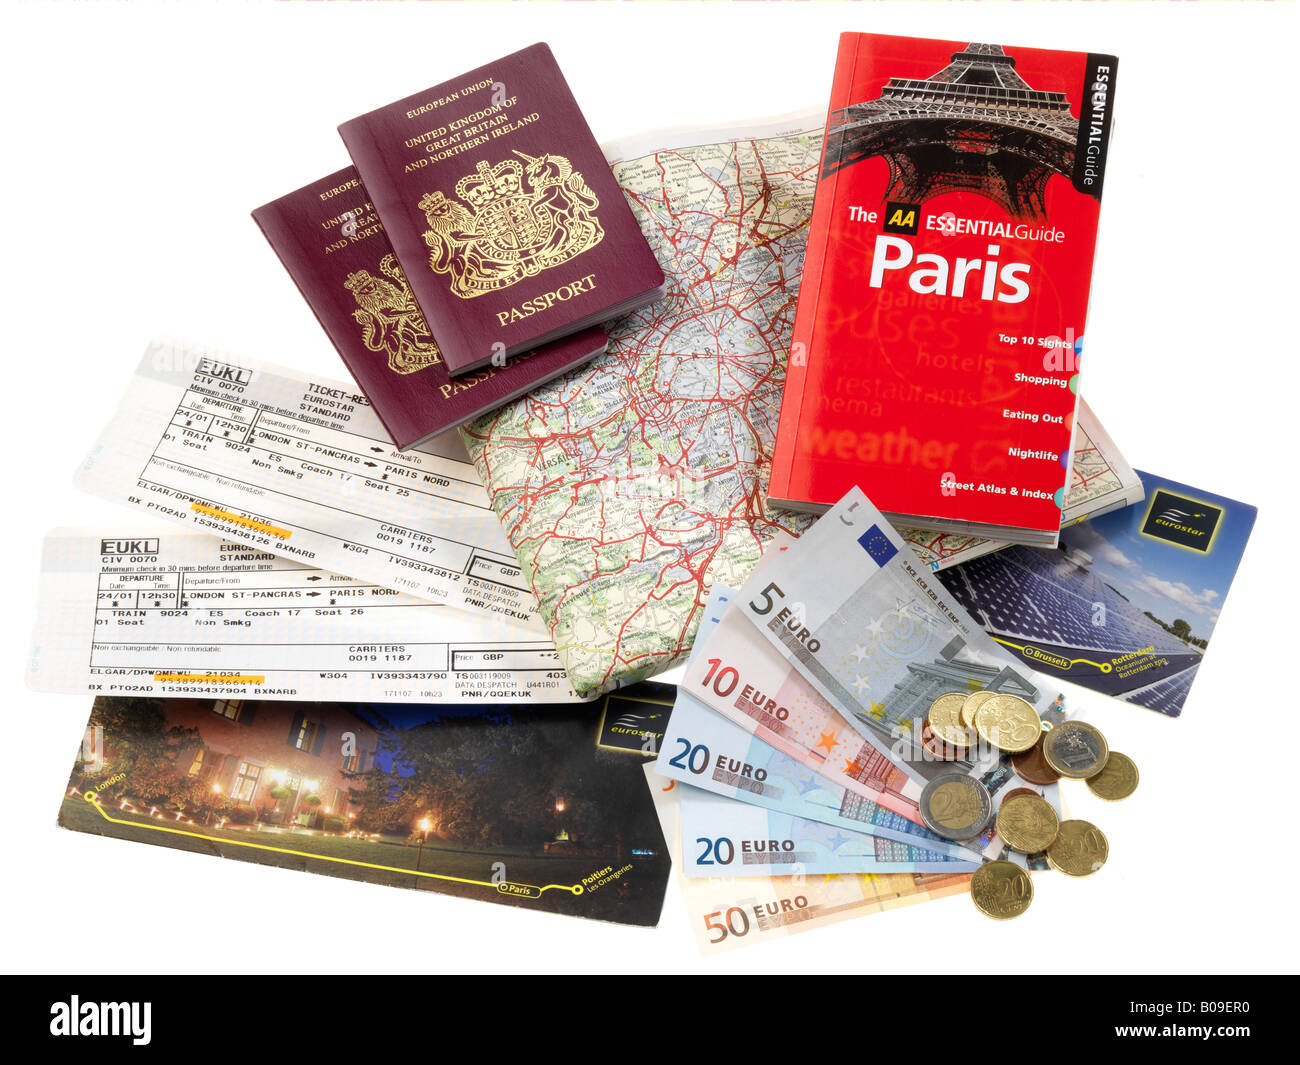 Eurostar billetes, pasaportes y Euros Foto de stock